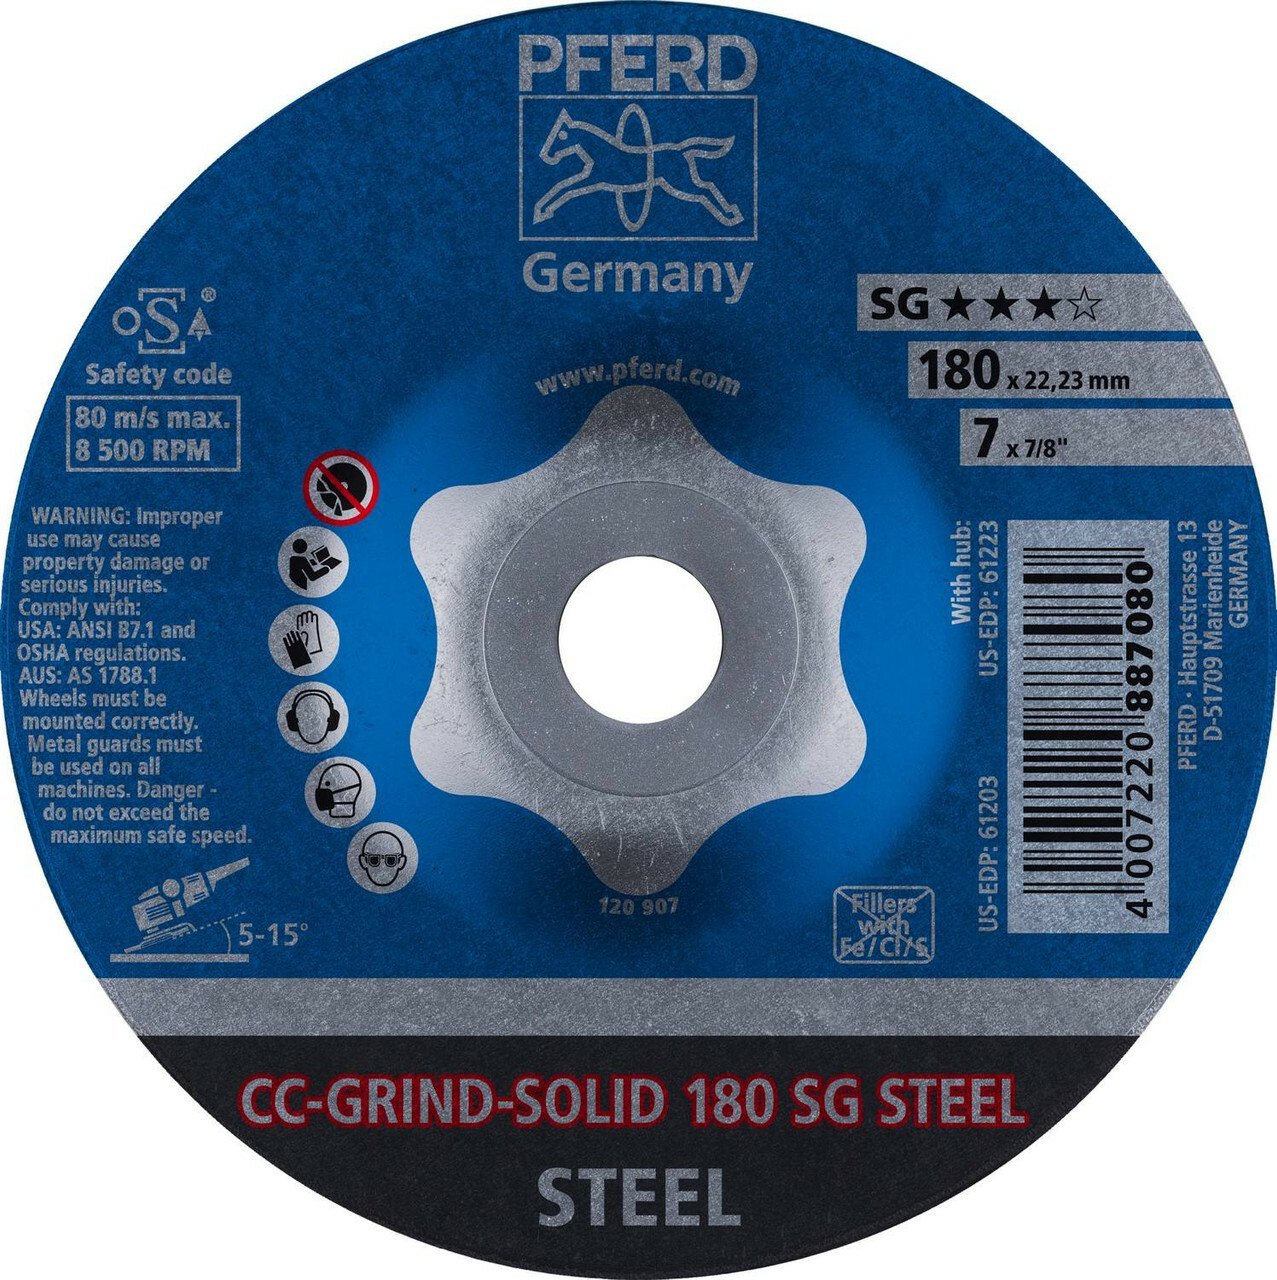 CC-GRIND-SOLID SG STEEL Grinding Discs